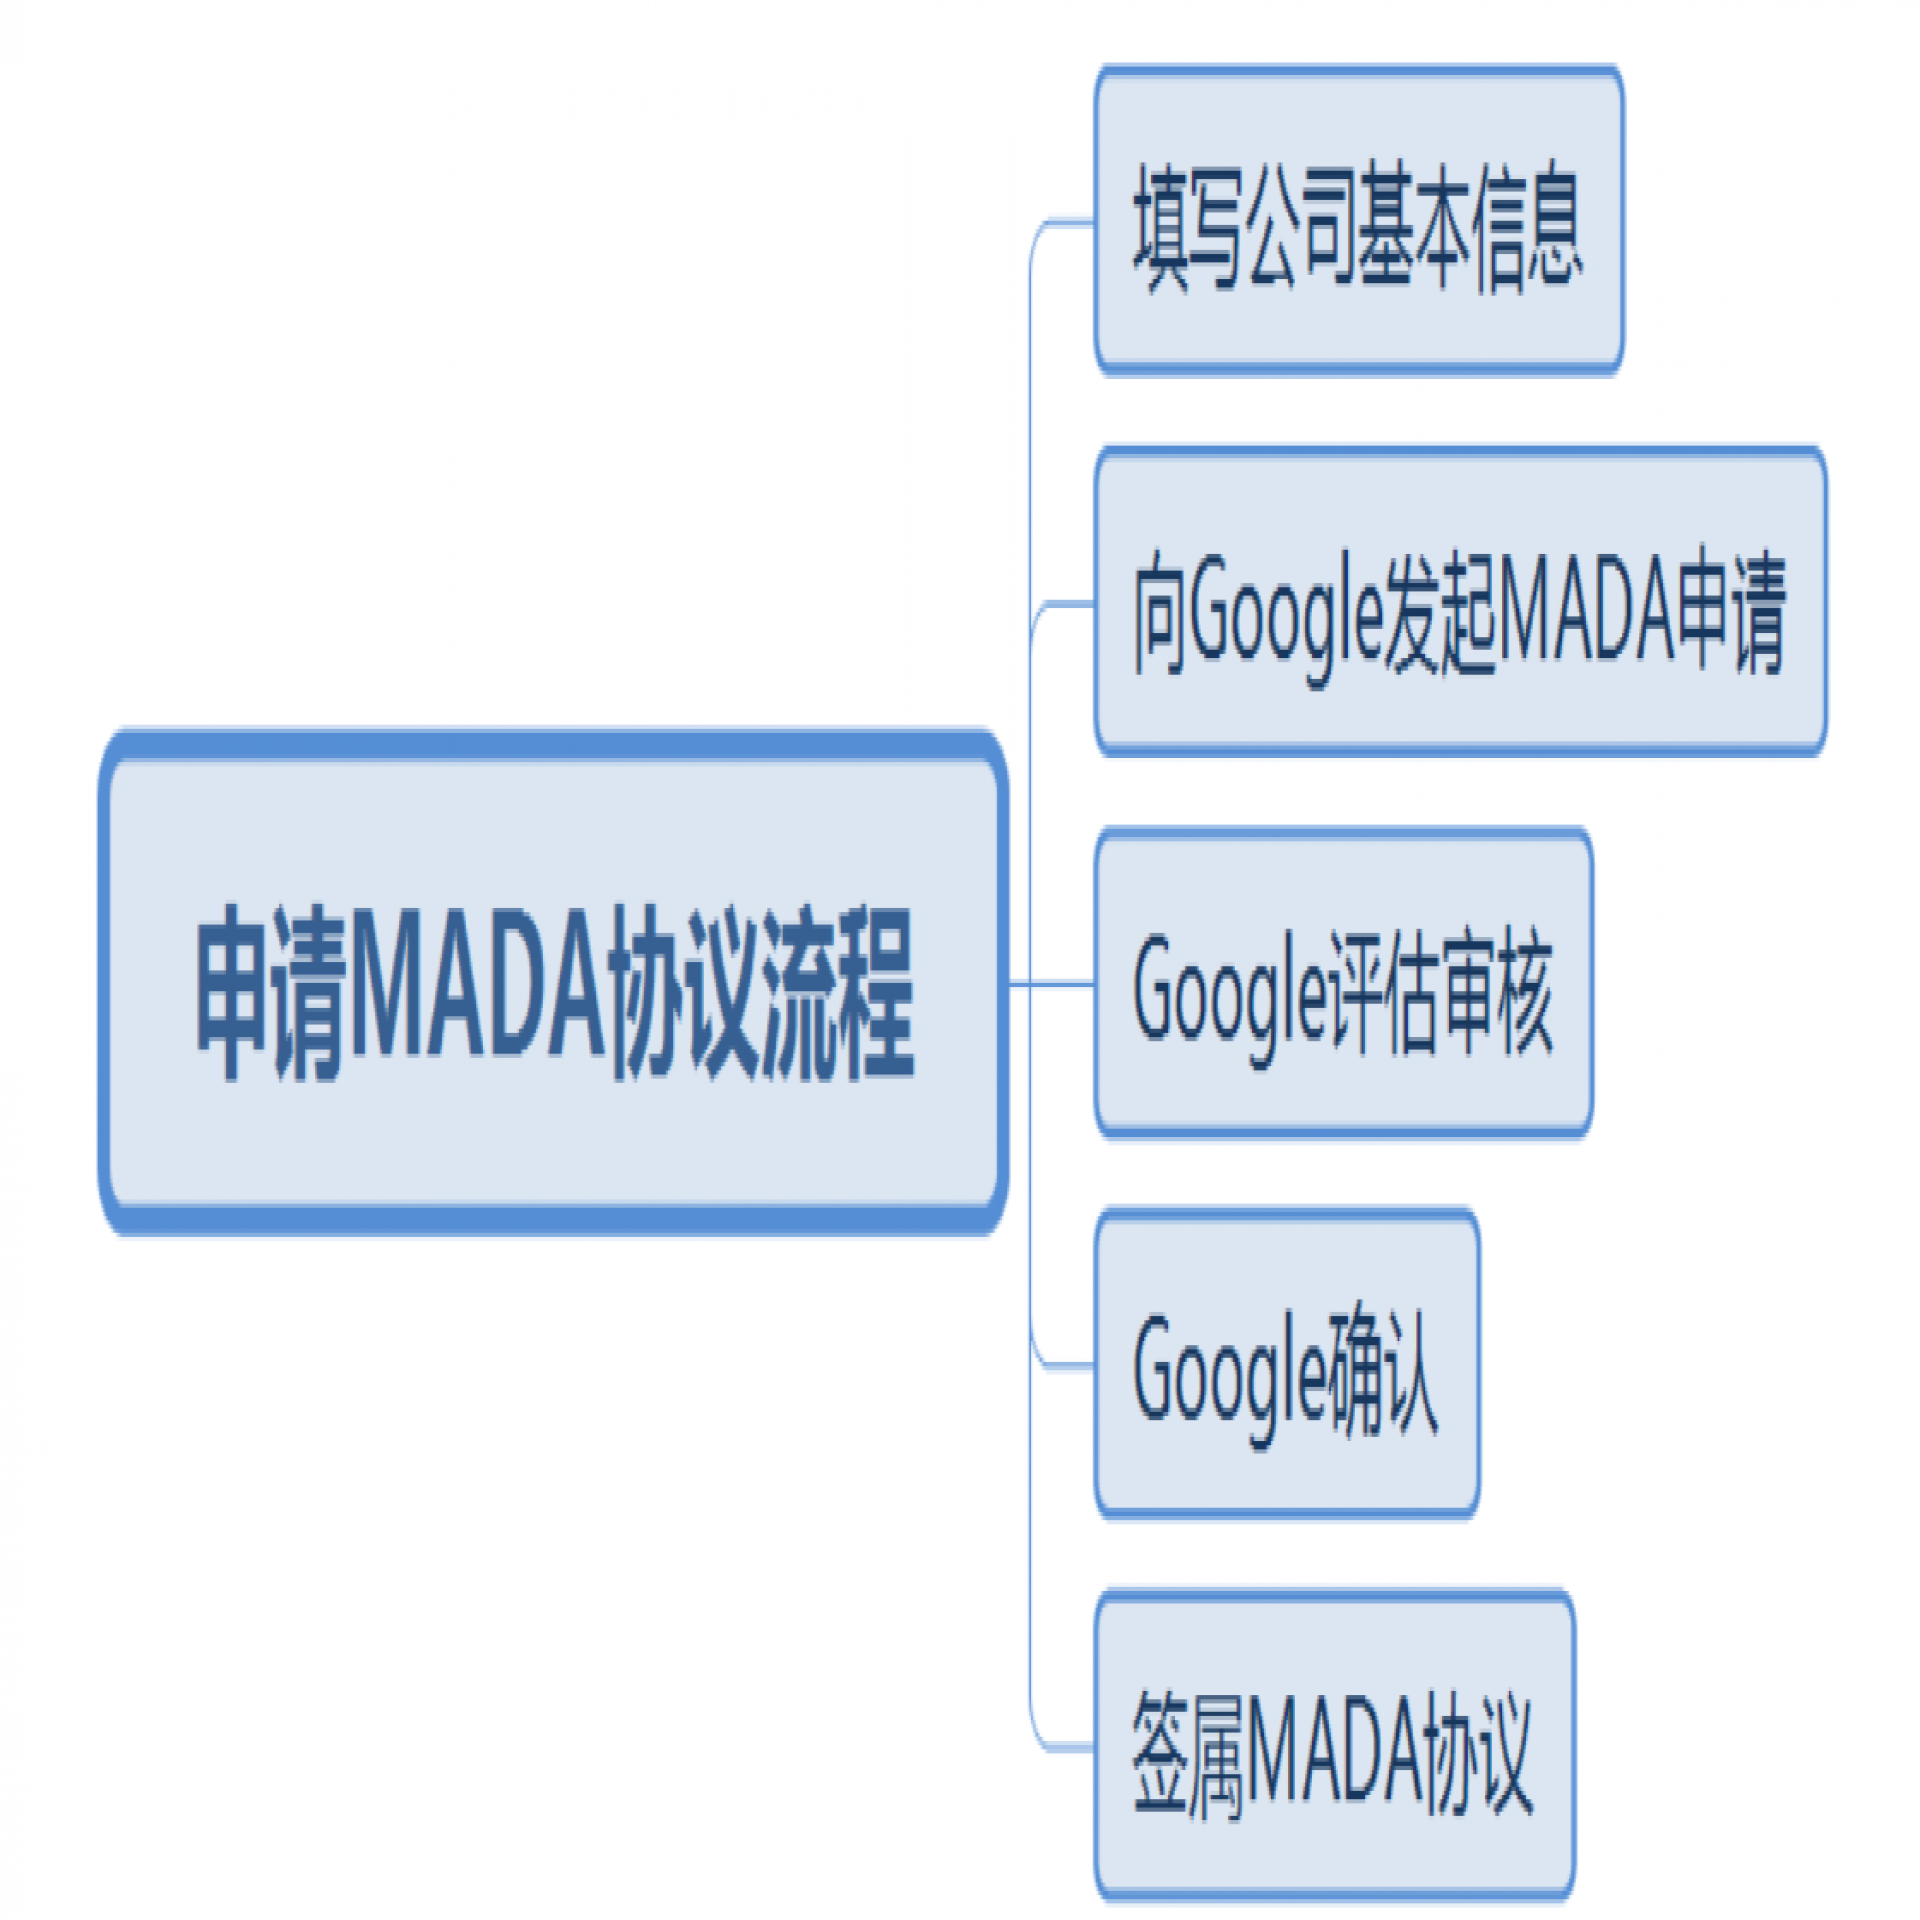 什么是谷歌GMS认证MADA协议？